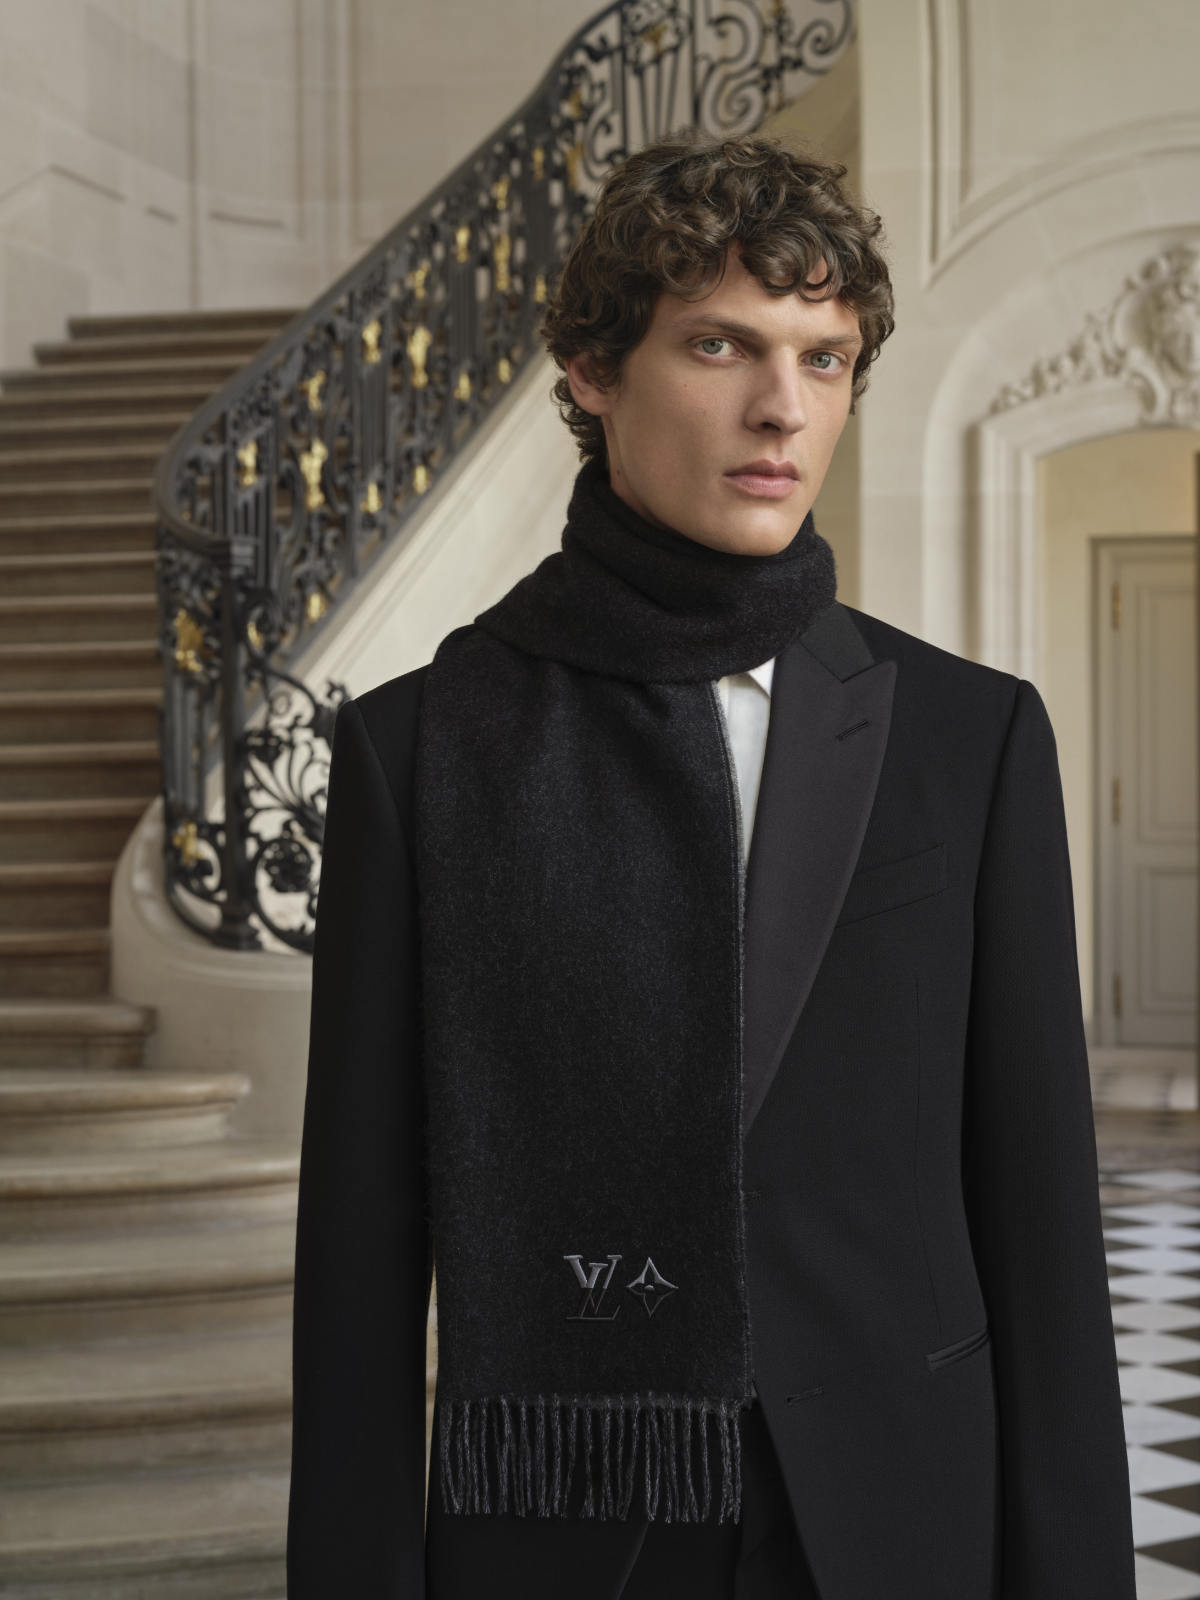 Louis Vuitton: Louis Vuitton Introduces A Formal Men's Wardrobe